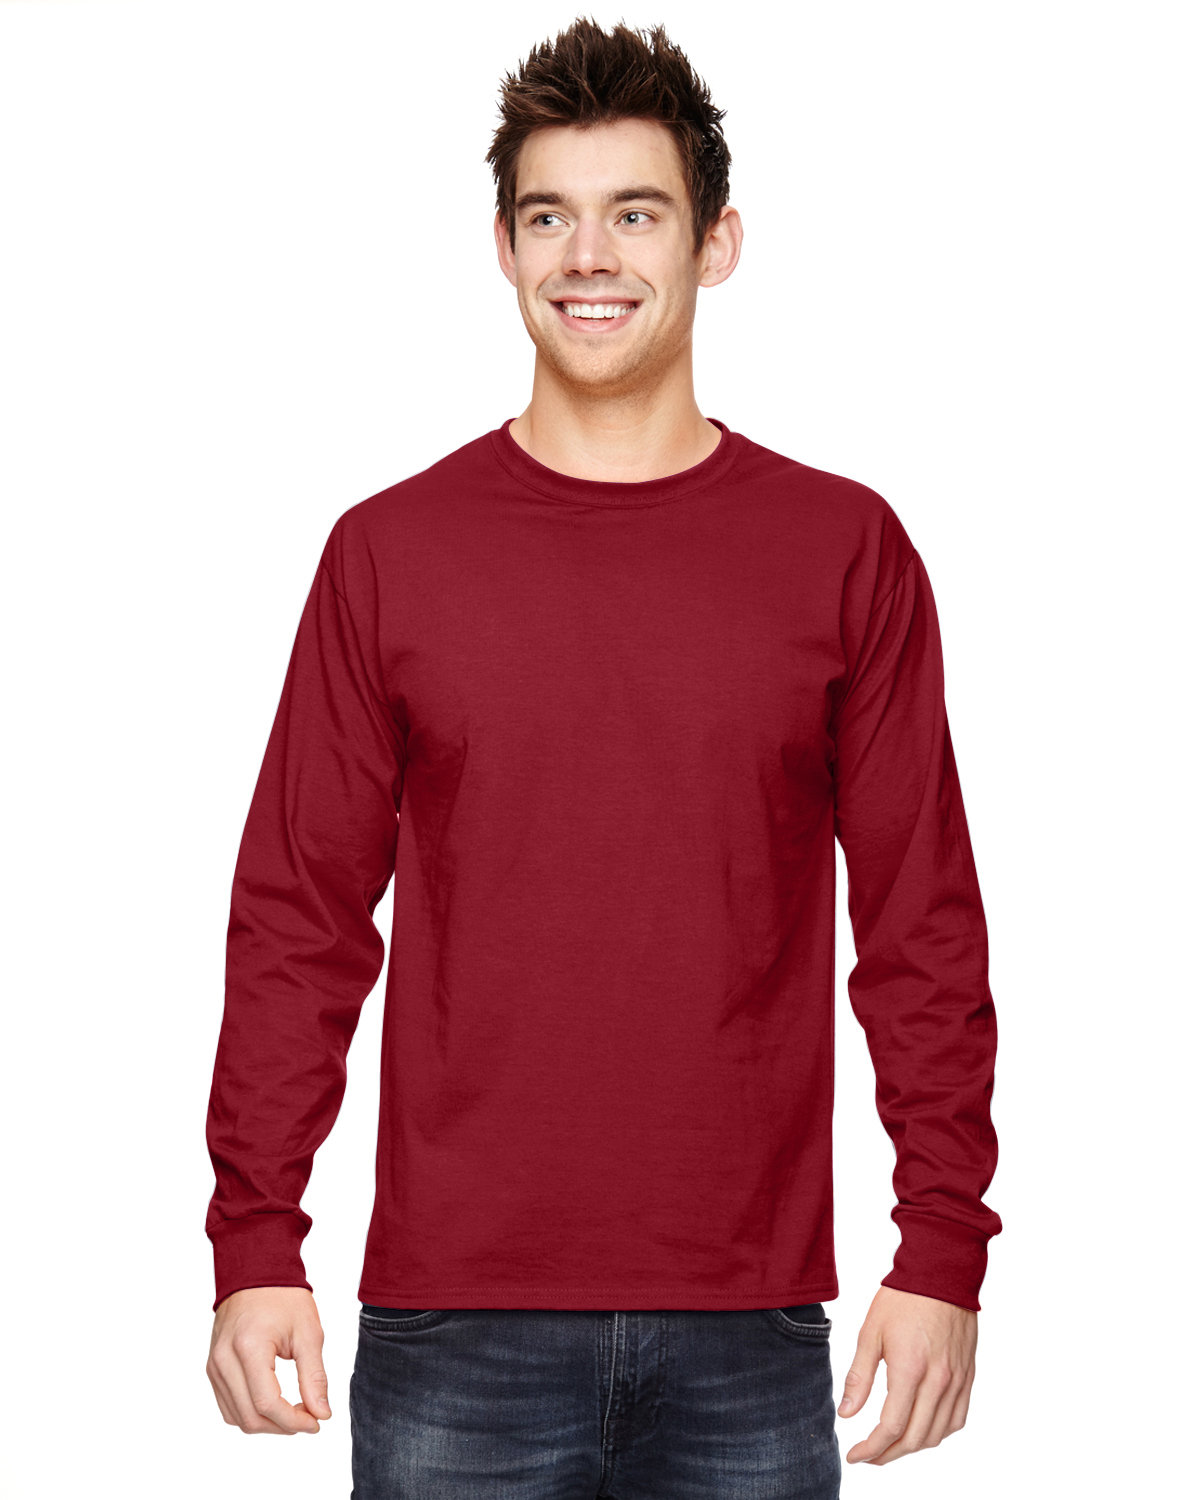 https://images.shirtspace.com/fullsize/1fx8ytXeroVgSJ6LeLUUig%3D%3D/333746/2042-fruit-of-the-loom-4930-hd-cotton-100-cotton-long-sleeve-t-shirt-front-crimson.jpg